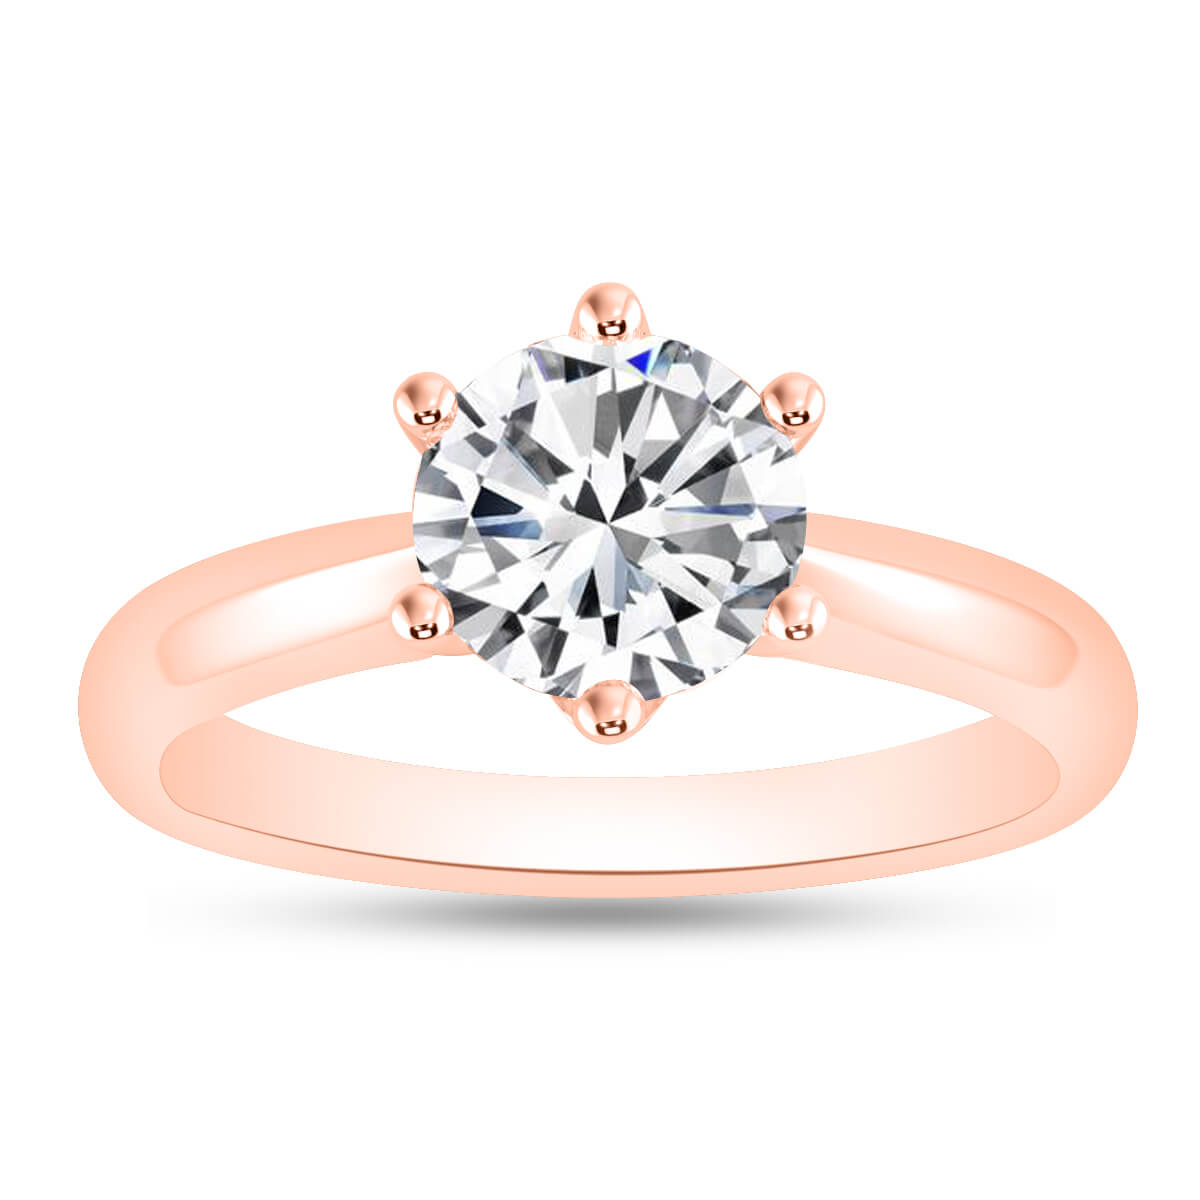 Silver Engagement Rings Swarovski Crystal Floral Forever Ring Image 2